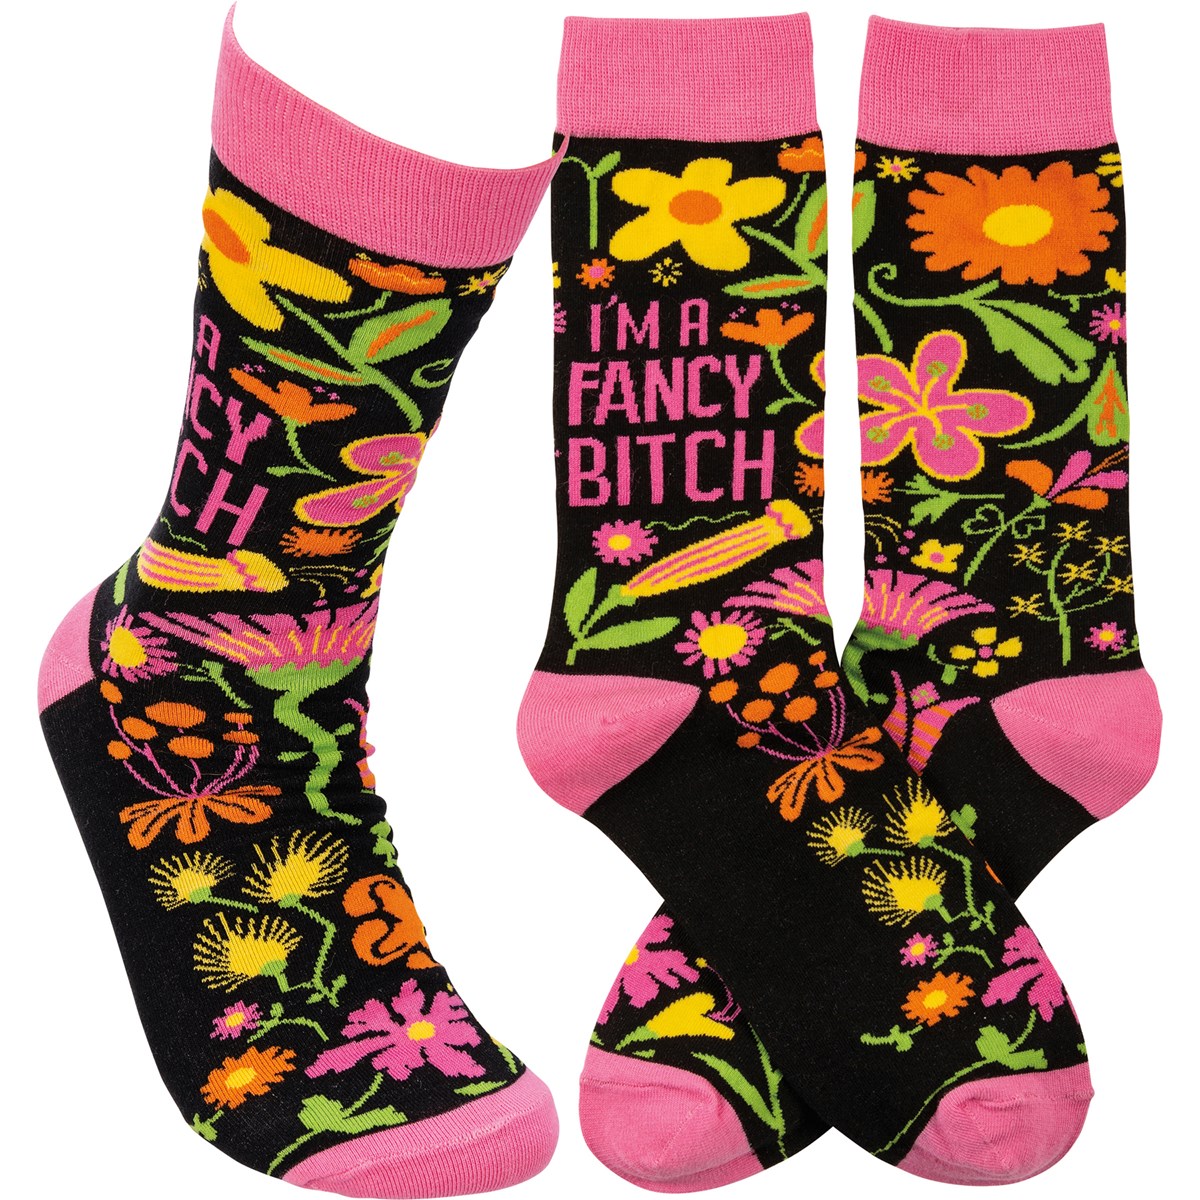 I'm A Fancy Bitch Socks - Cotton, Nylon, Spandex